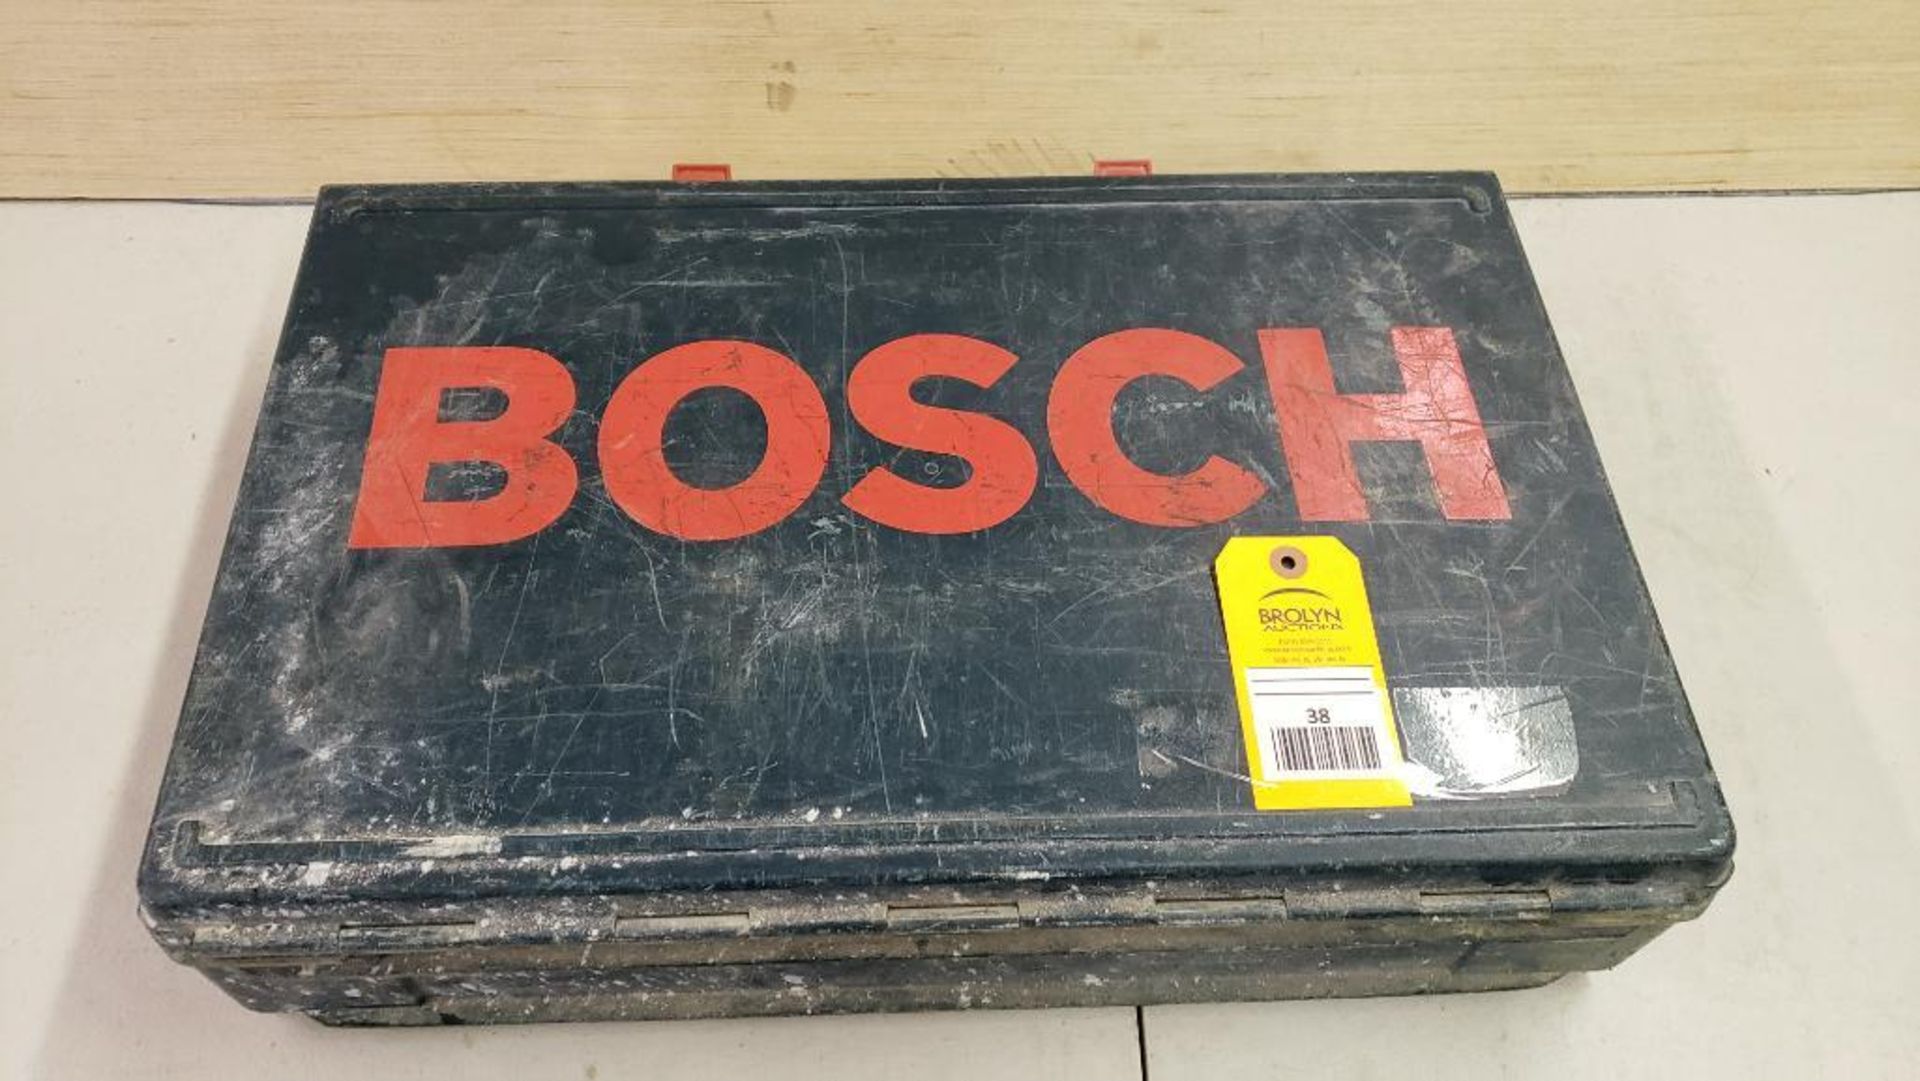 Bosch 11316EVS Boschhammer Demo hammer. - Image 2 of 8